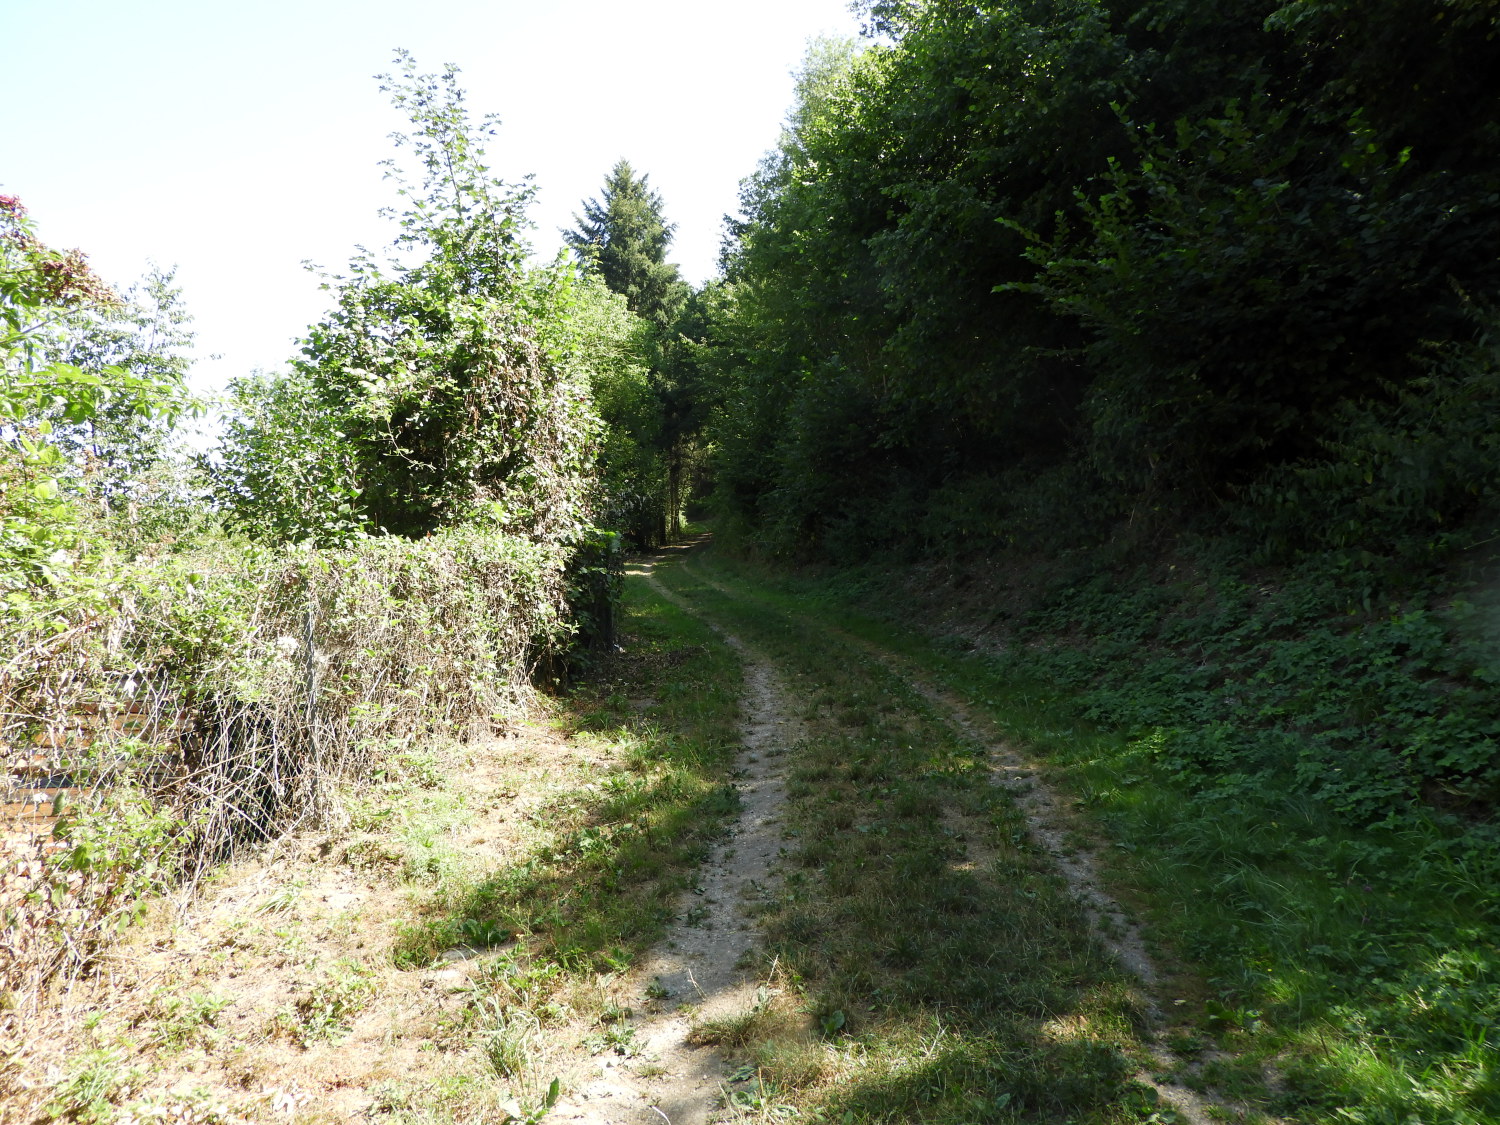 The path from Oberdiebach to Rheindiebach